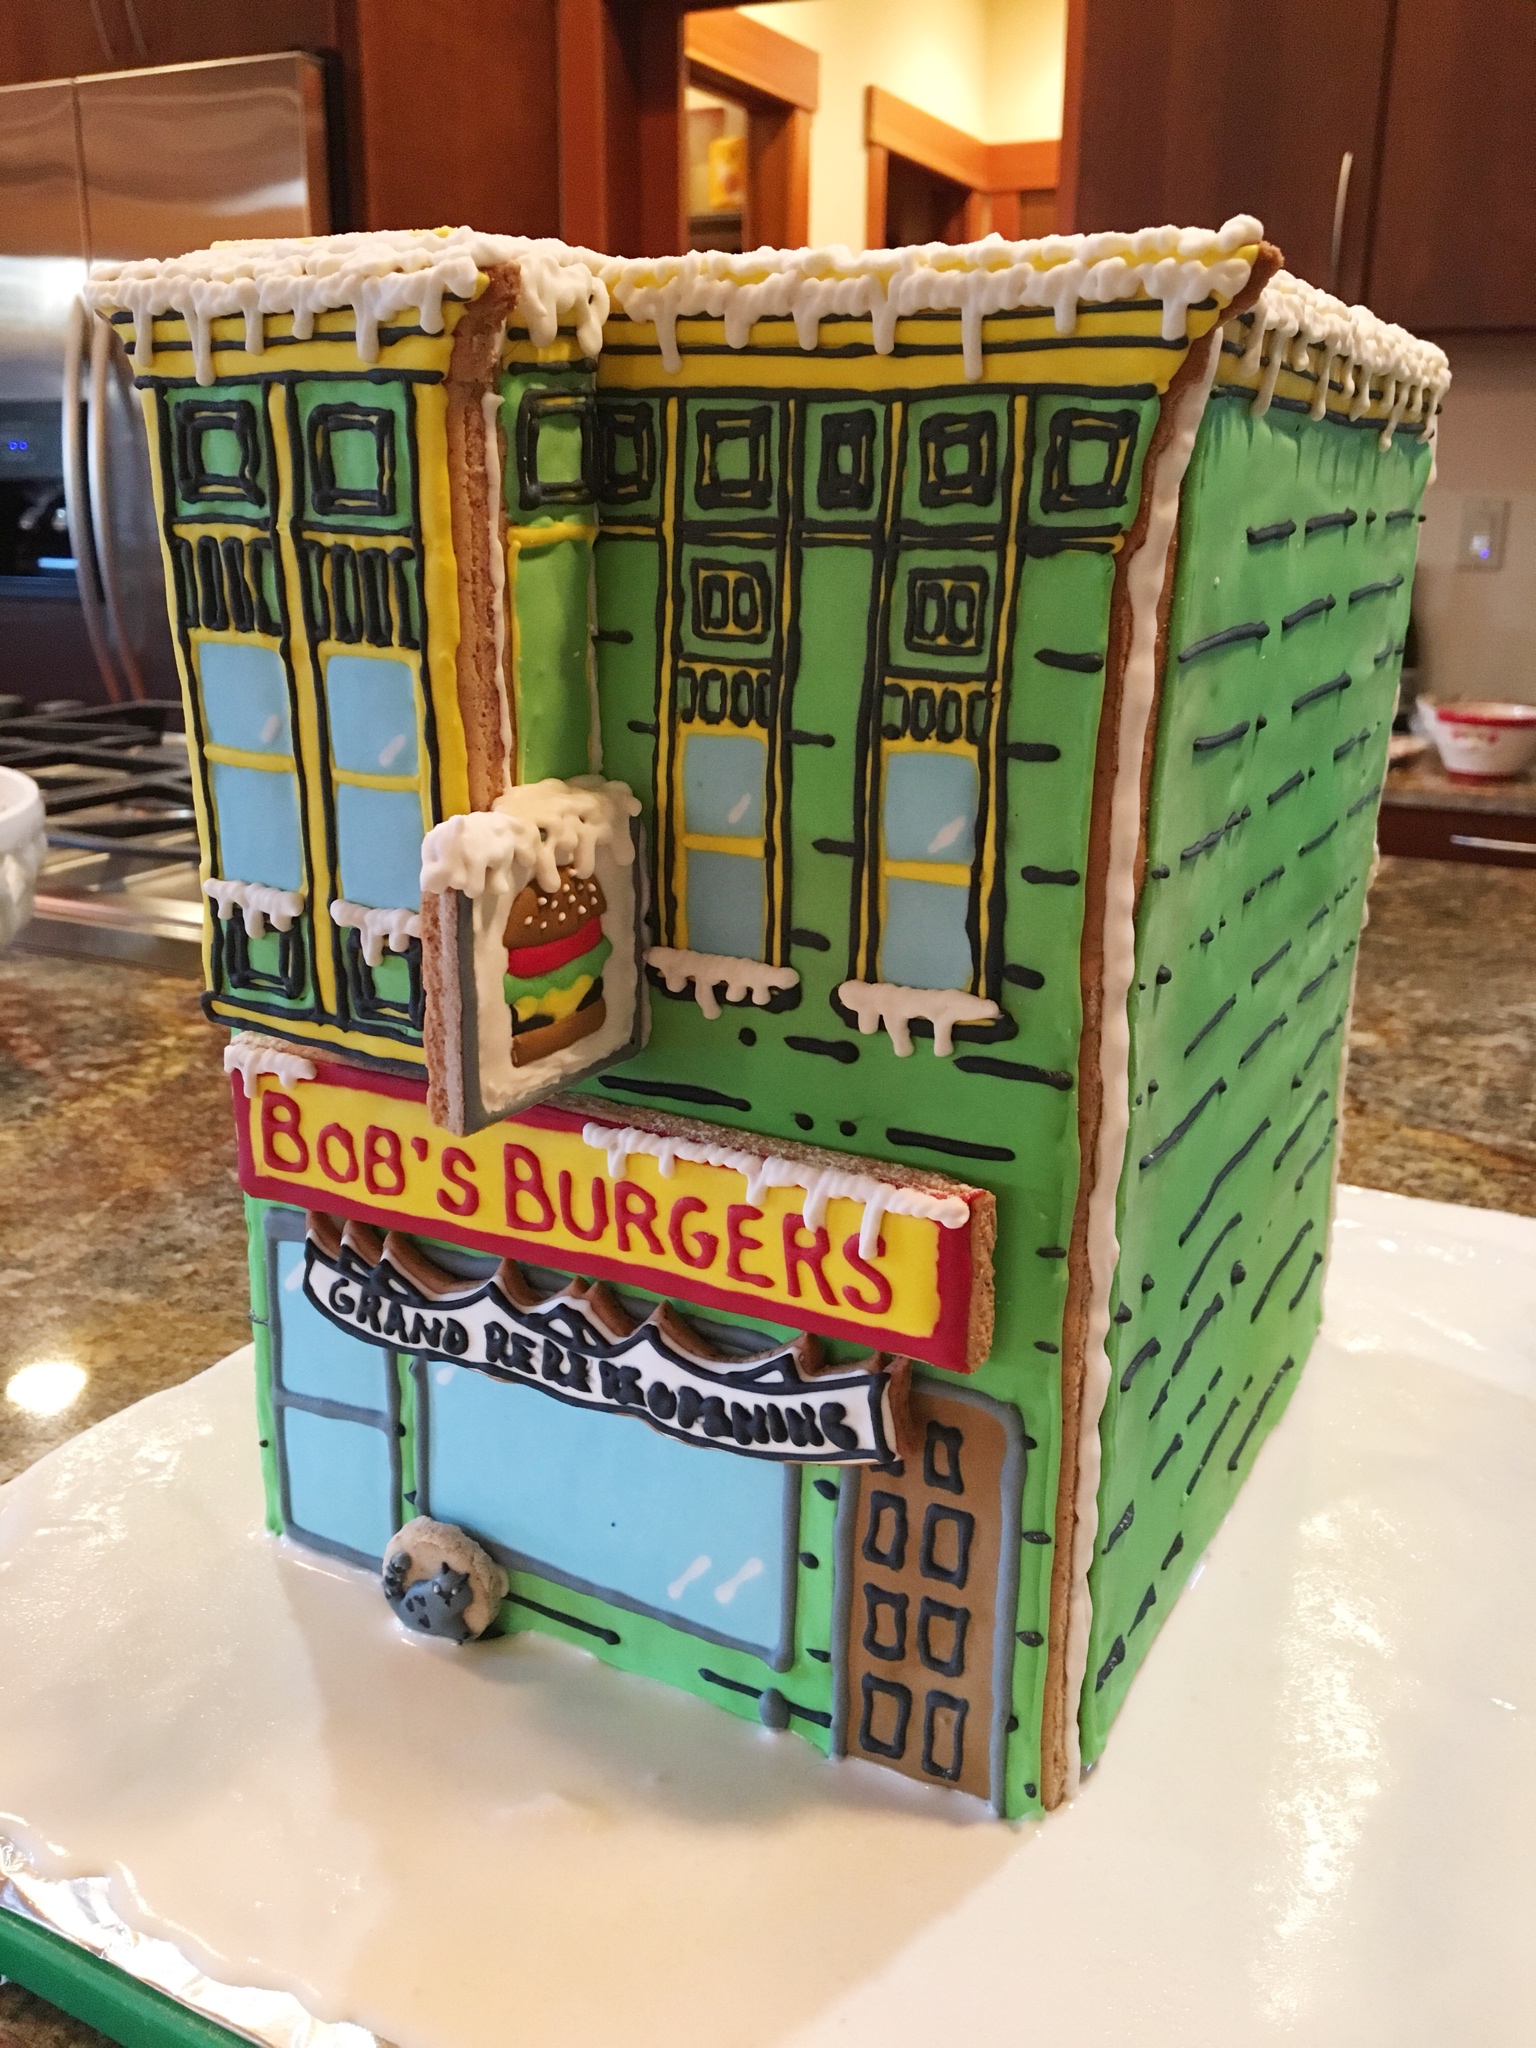 bob's burgers gingerbread house - 00 0000000 Do Bob'S Burgers Grand Relisopaning Do. Do